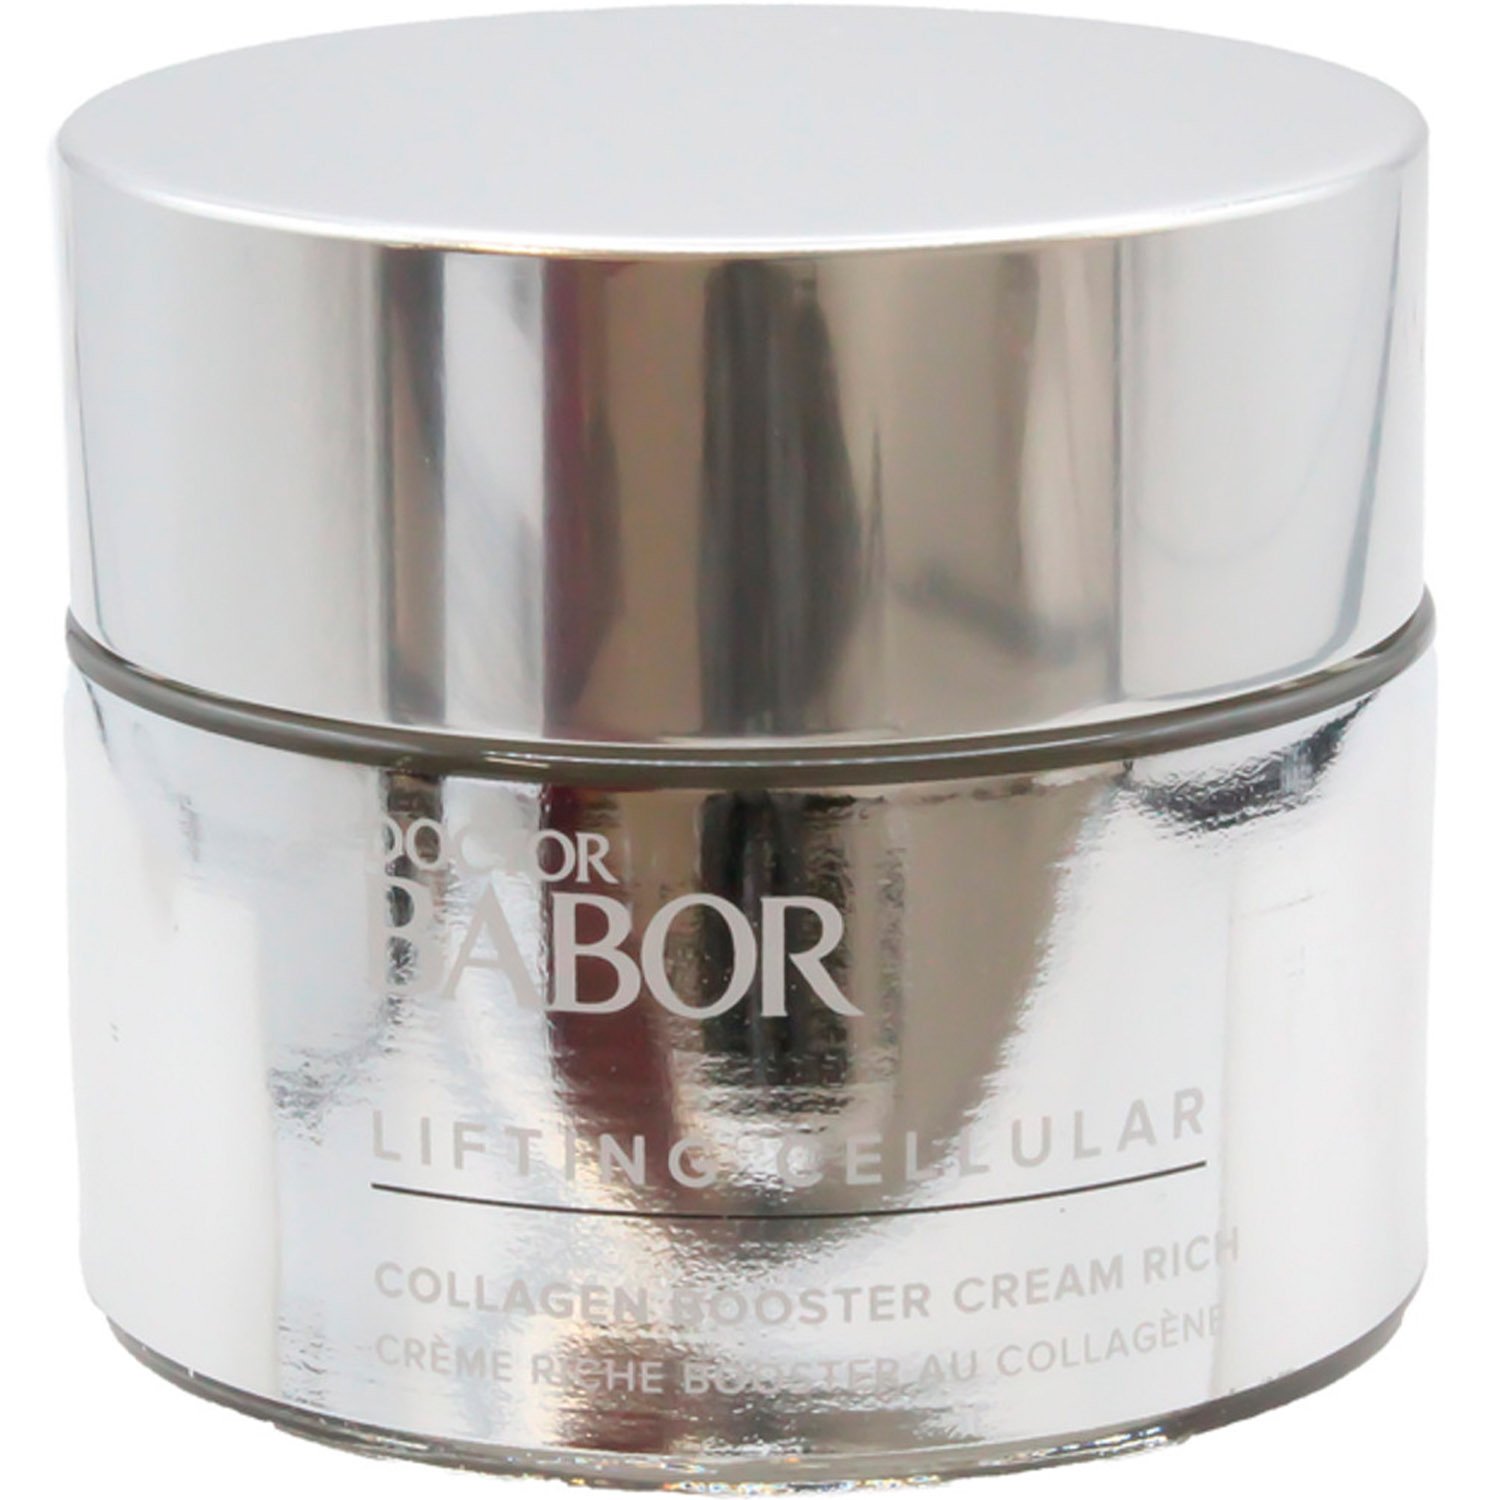 Крем для обличчя Babor Doctor Babor Collagen Booster Cream Rich, 50 мл - фото 1